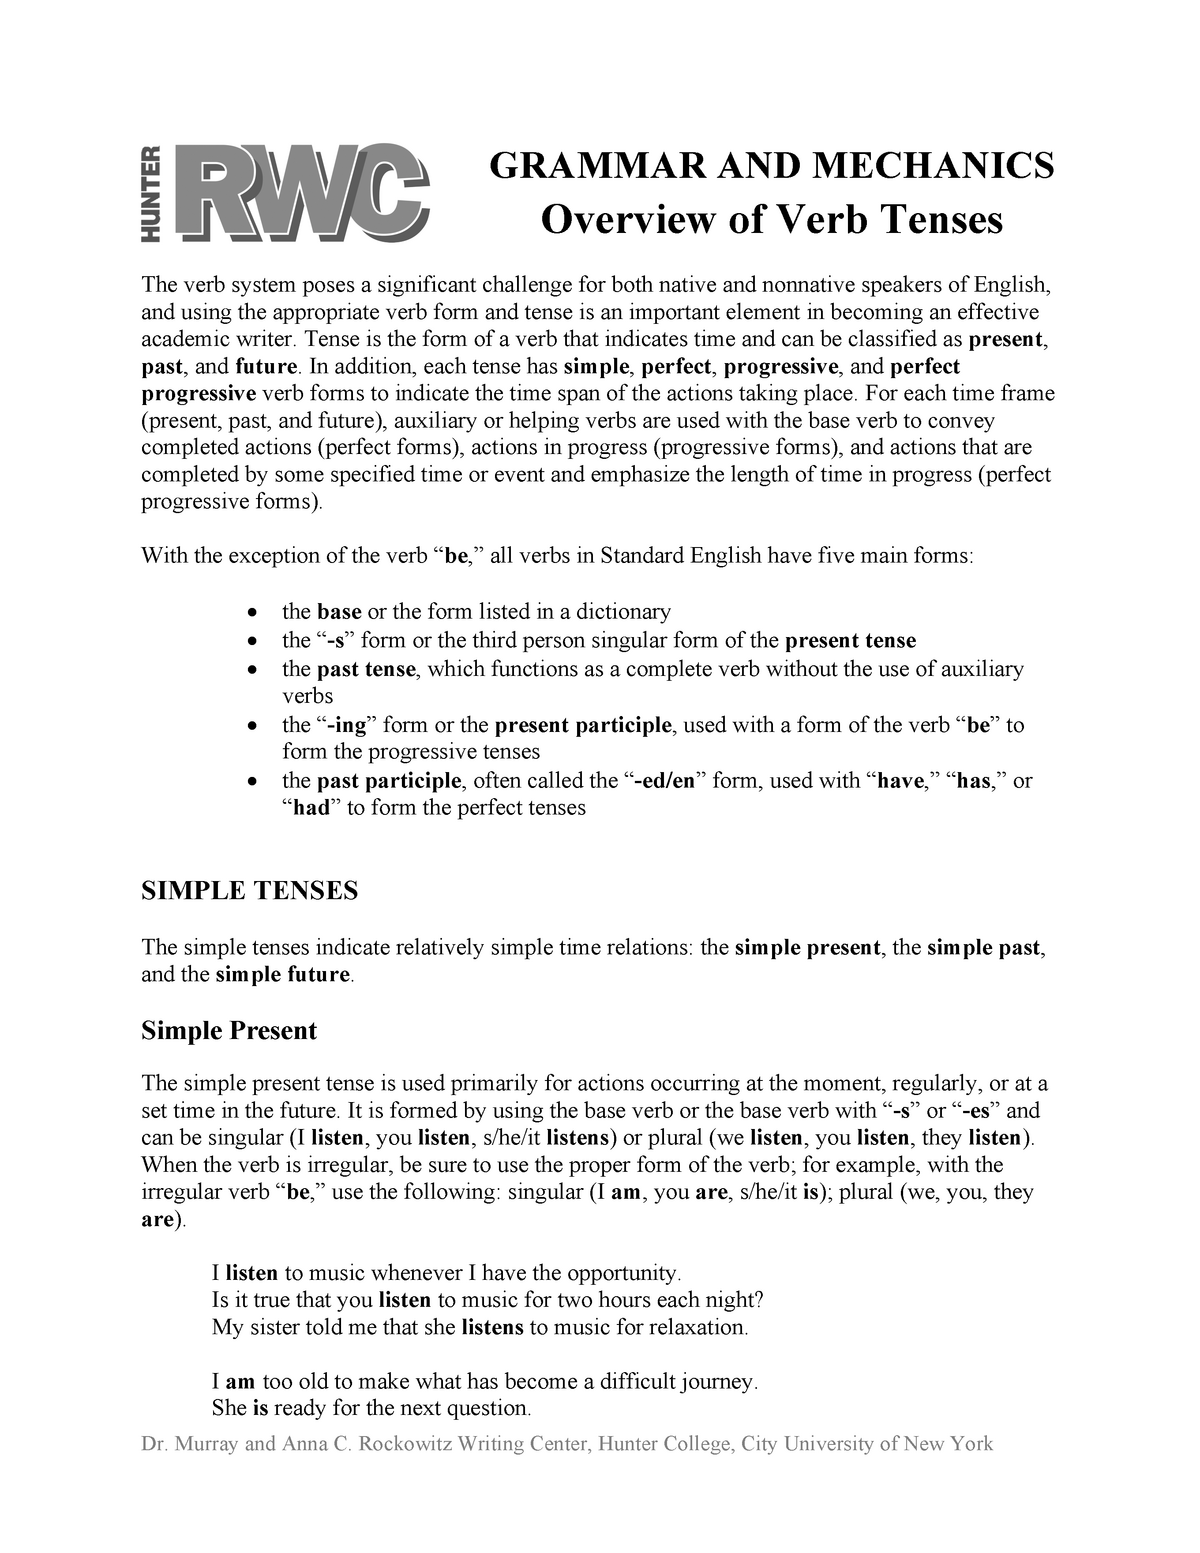 overview-of-verb-tenses-grammar-and-mechanics-overview-of-verb-tenses